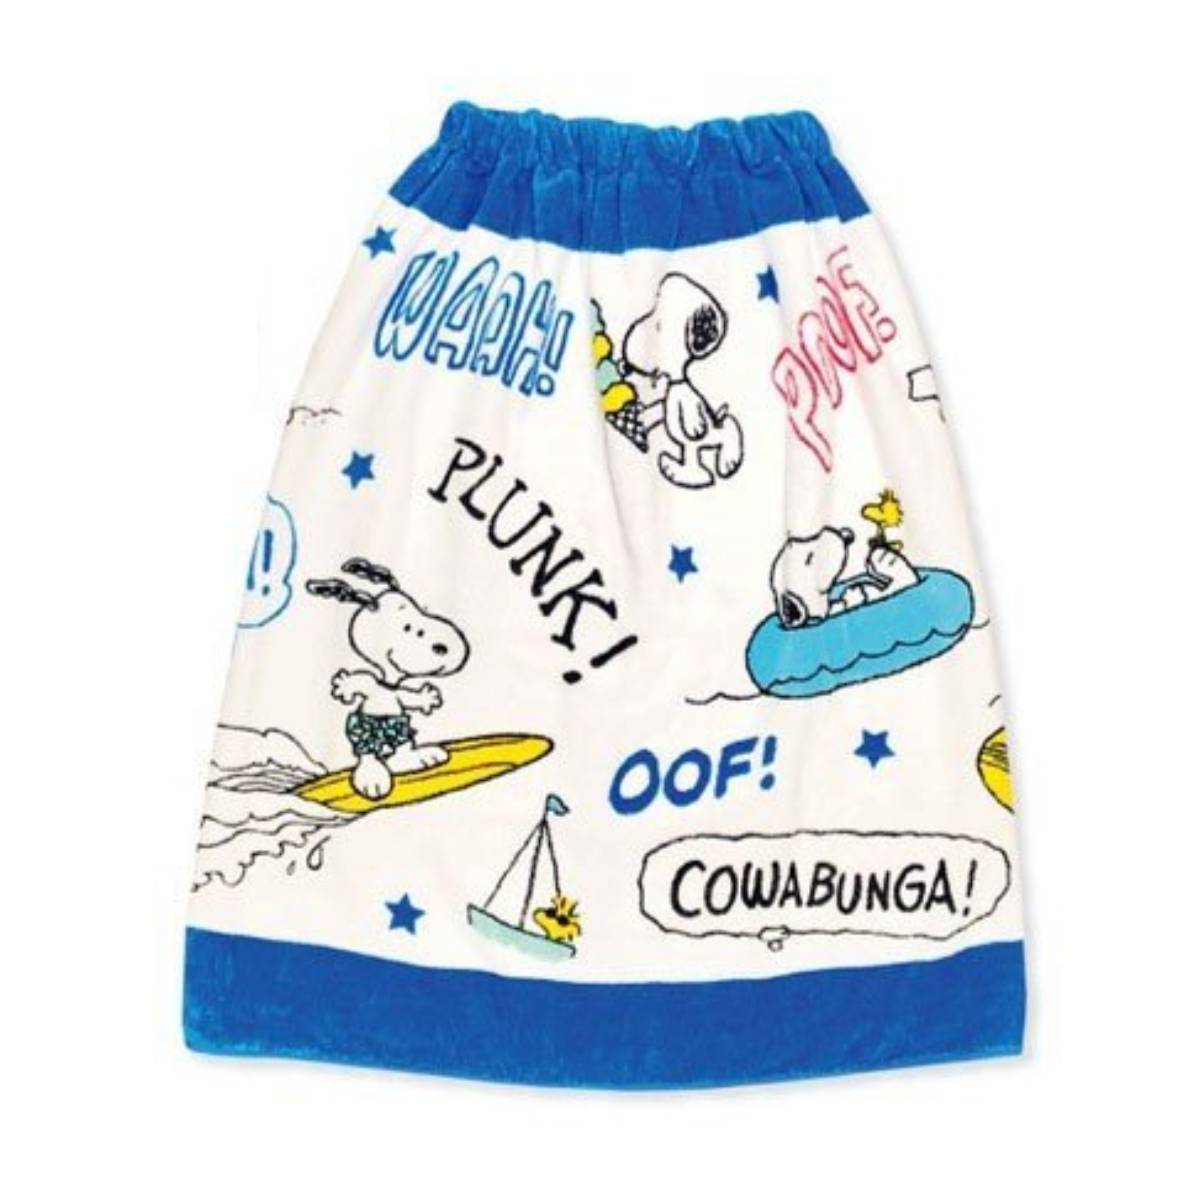 Wrap Towel - Snoopy Large (Japan Edition)